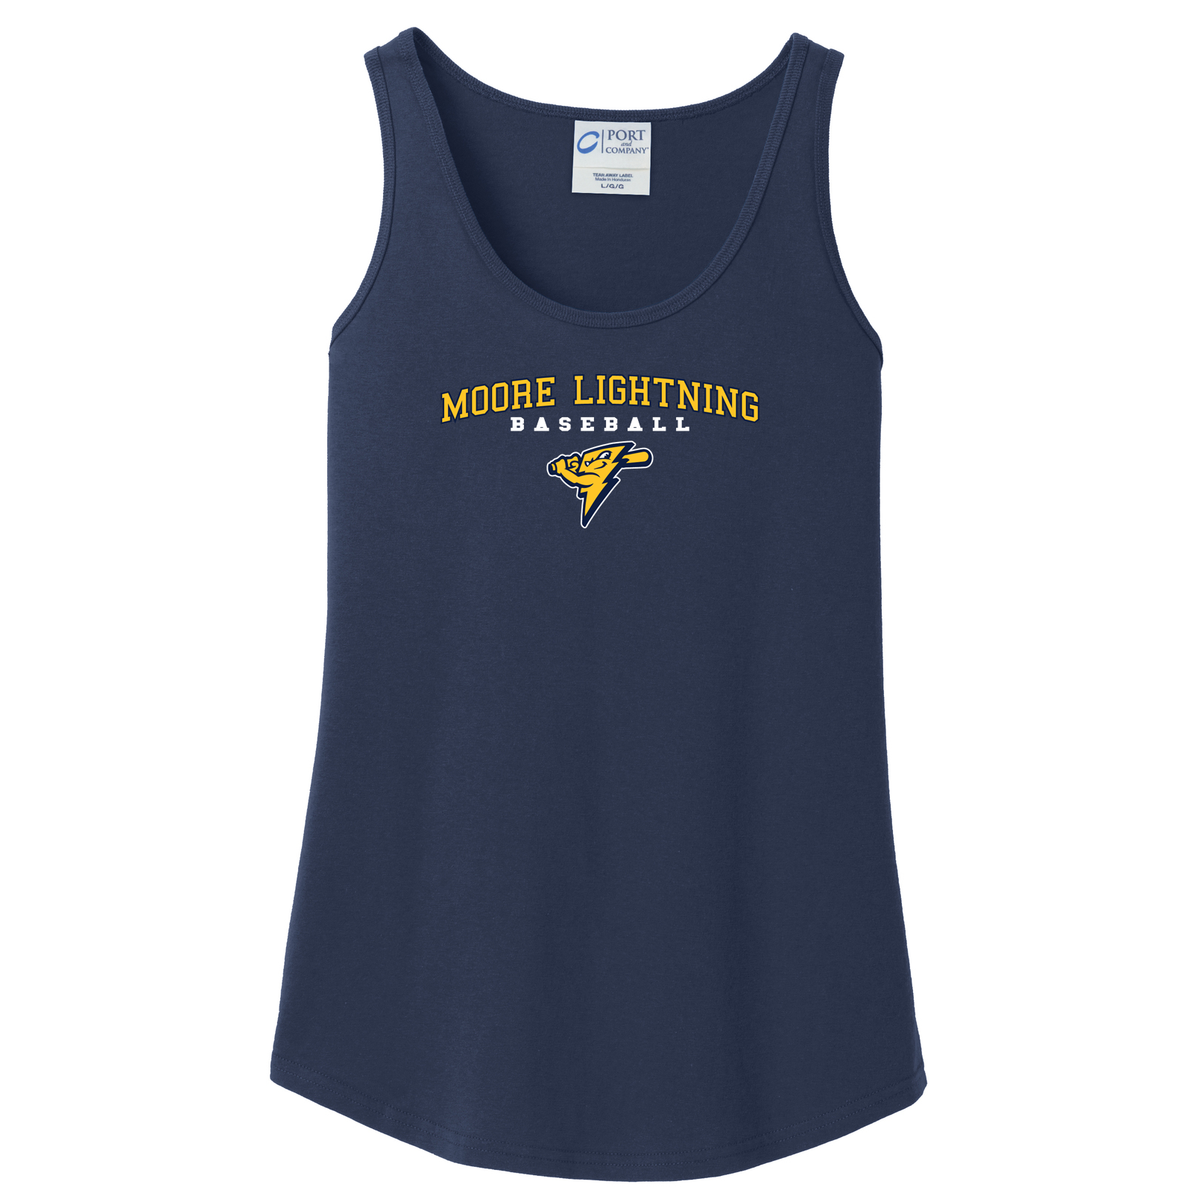 Moore Lightning Baseball  Women's Tank Top